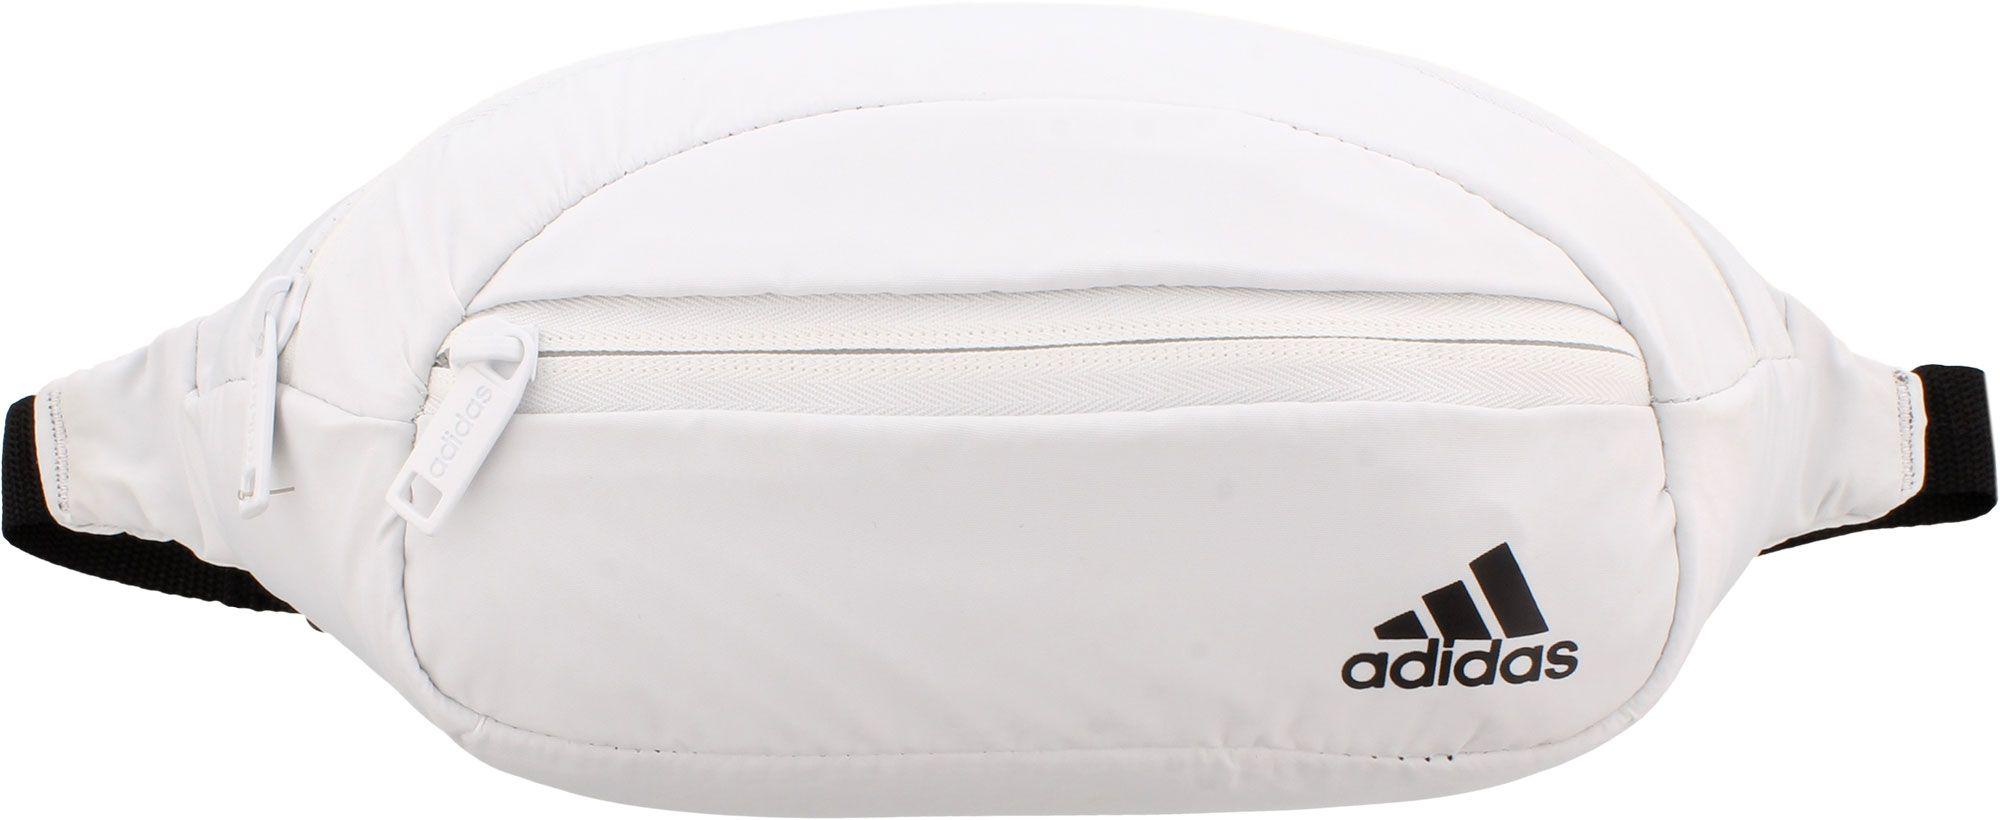 adidas waist bag white